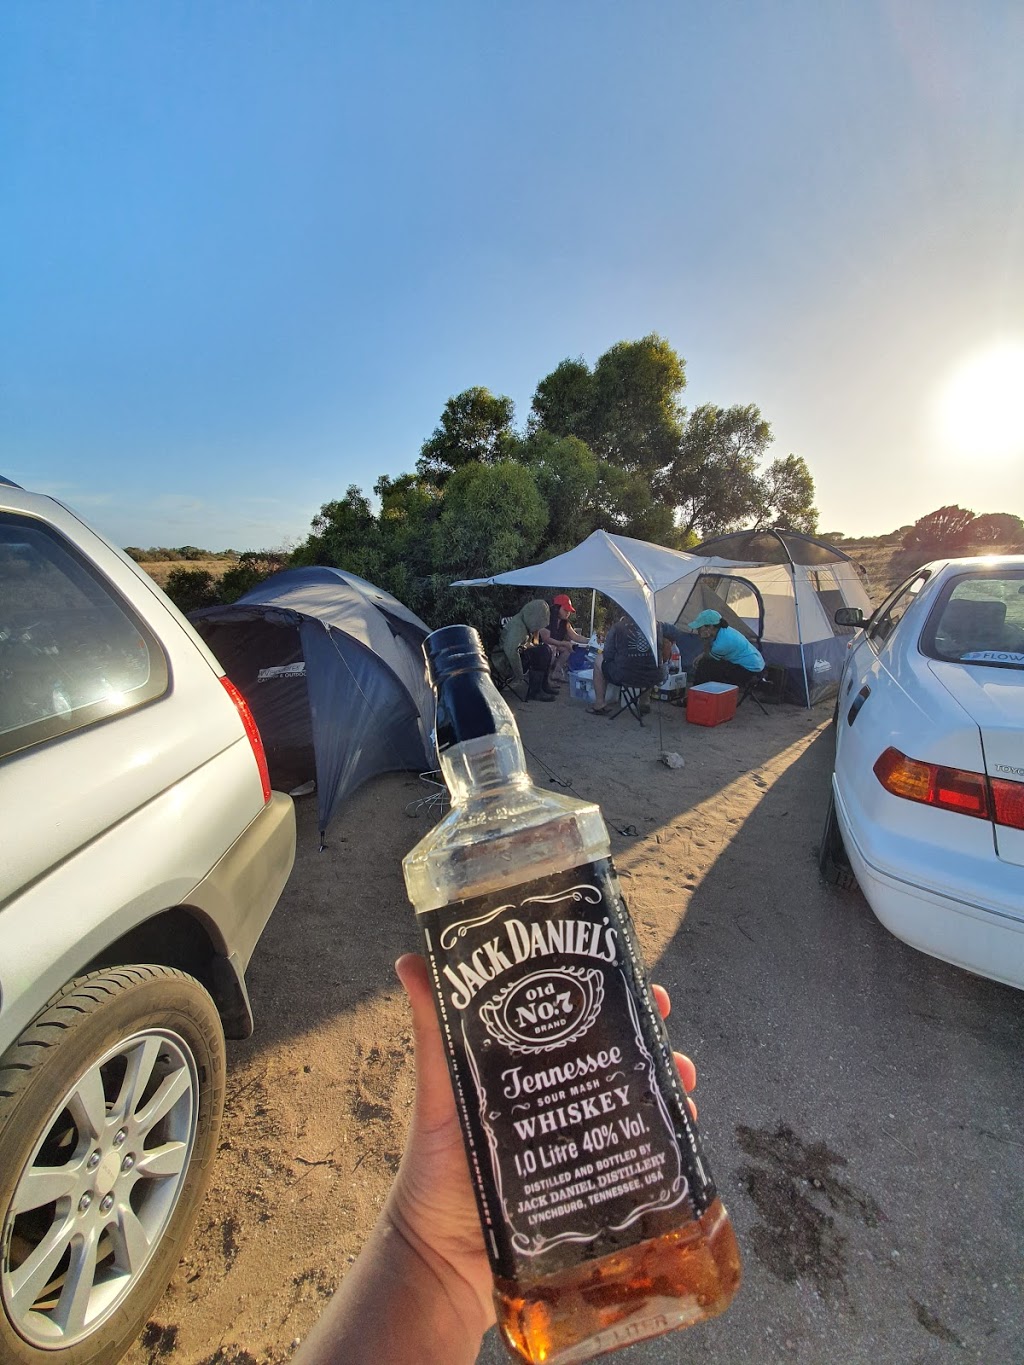 Parara Camp Ground | campground | Parara Point, Ardrossan SA 5571, Australia